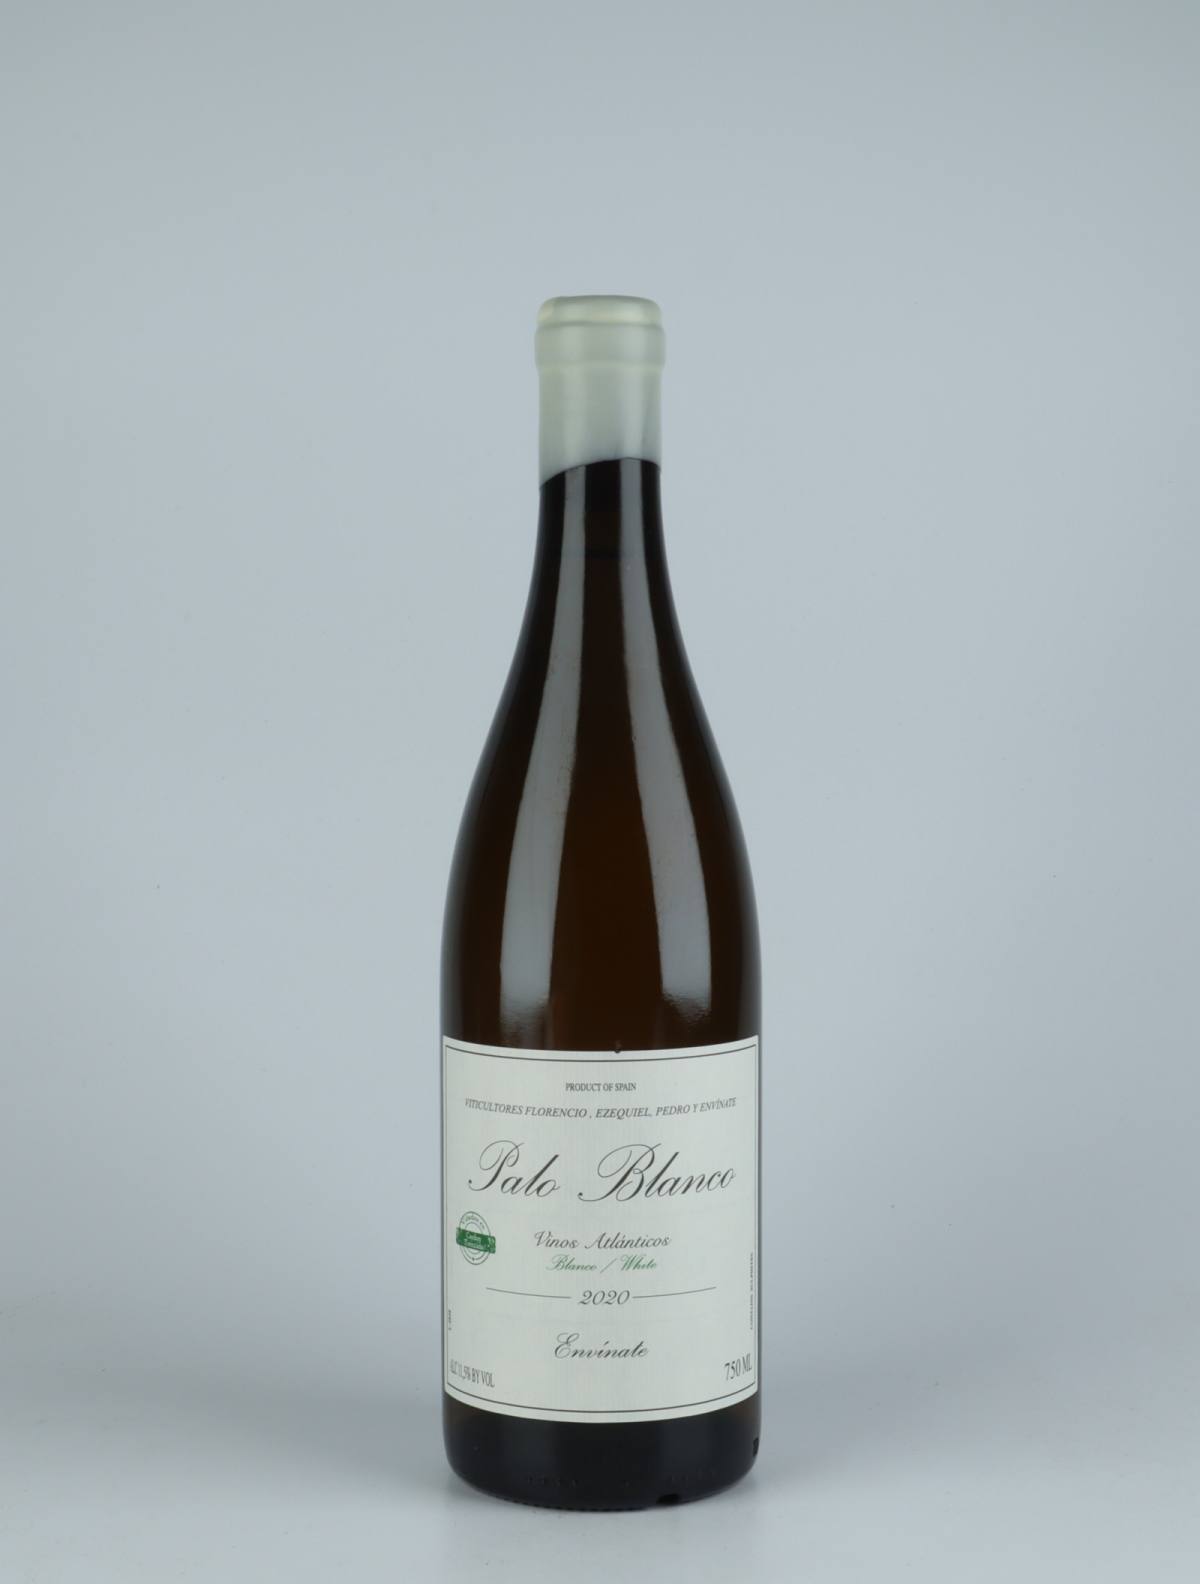 A bottle 2020 Palo Blanco - Tenerife White wine from Envínate,  in Spain